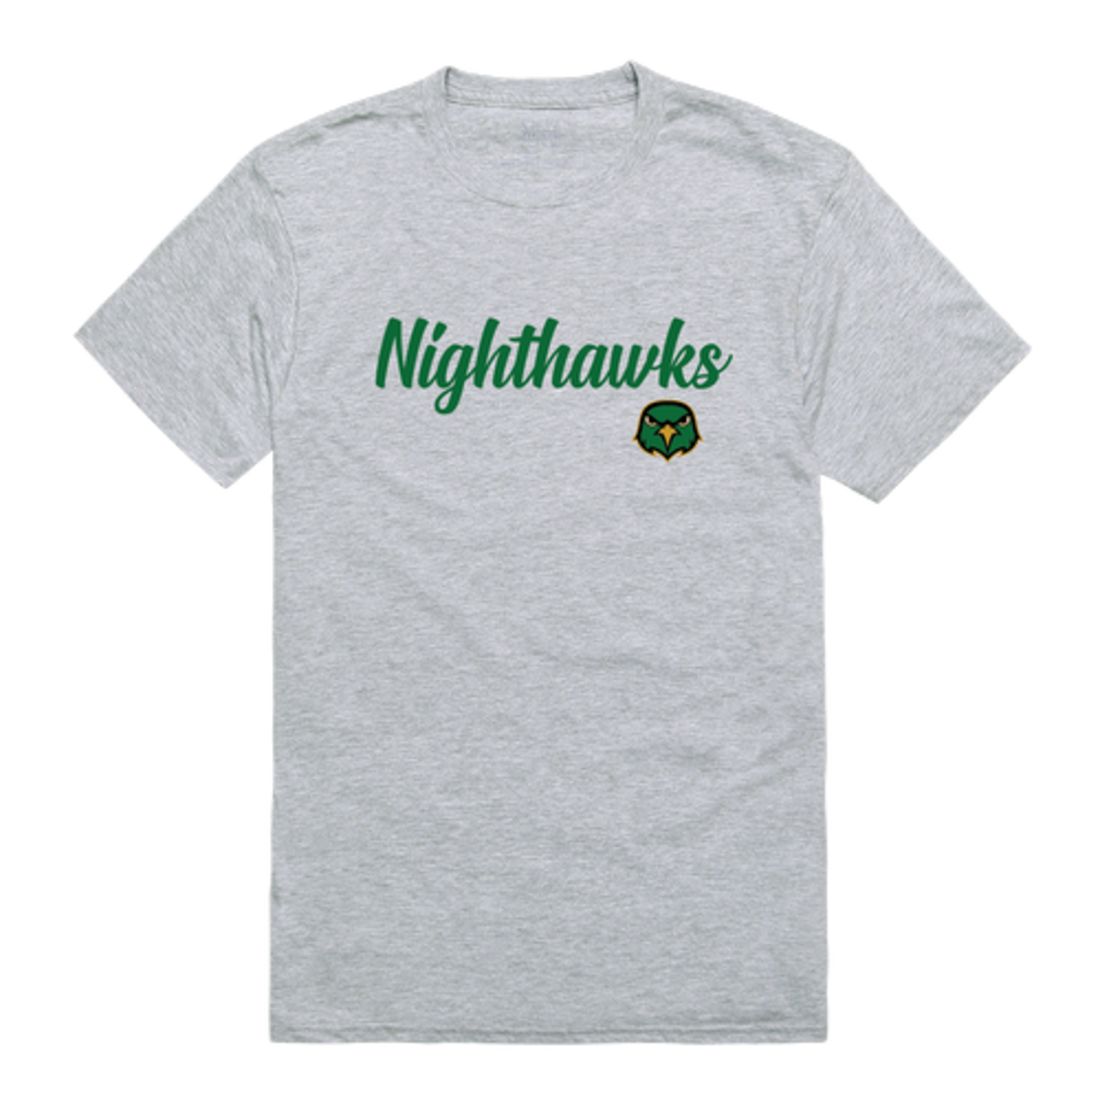 Northern Virginia Community College Nighthawks Script T-Shirt Tee